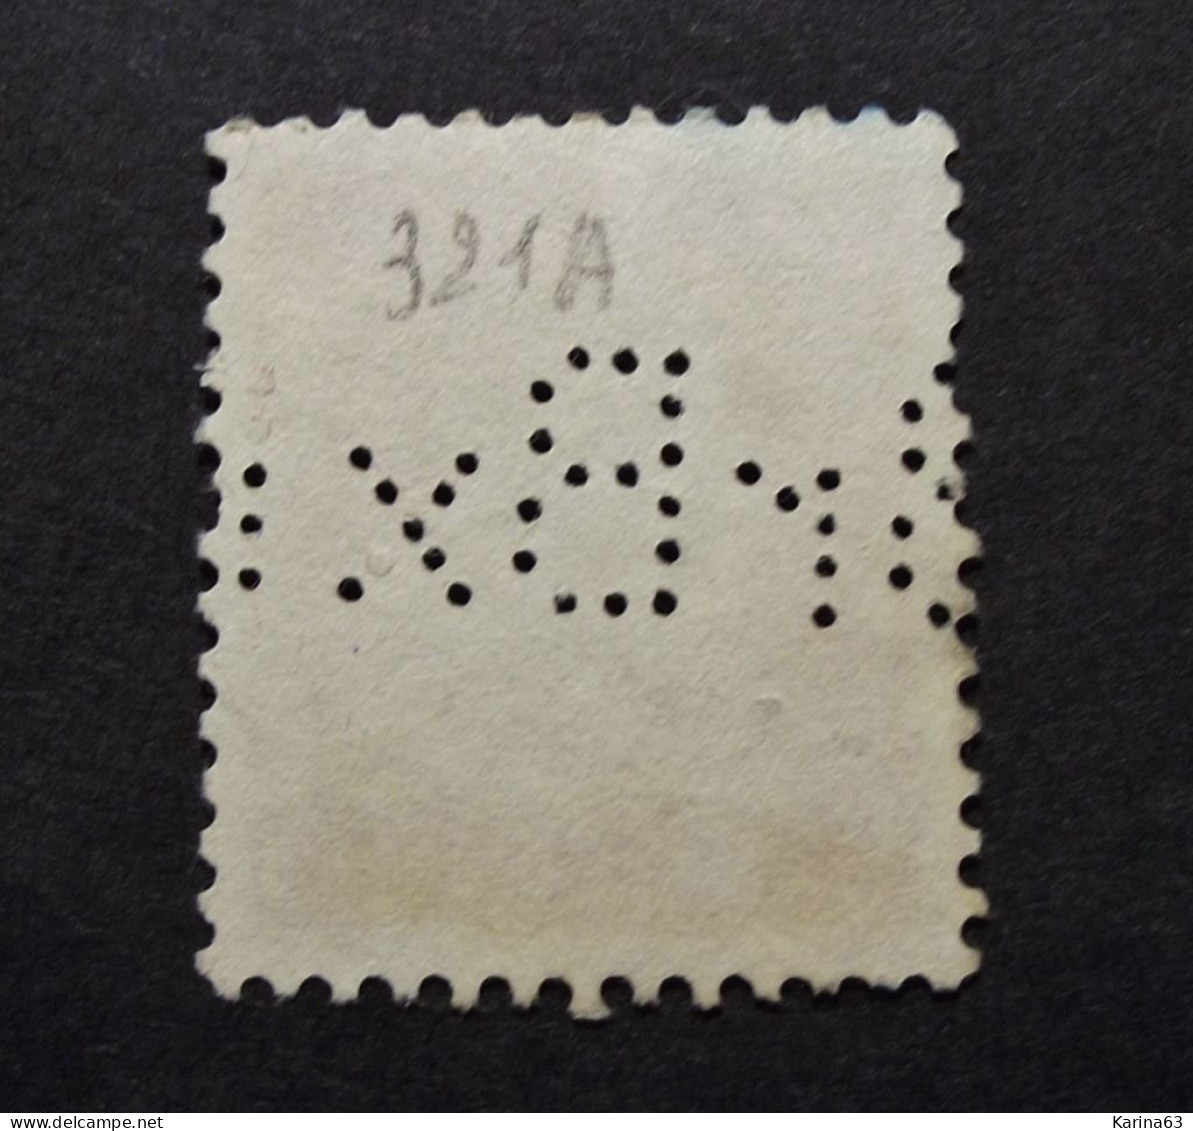 Denmark  - Danemark - 1967-70 - ( Frederic IX ) Perfin - Lochung - BrBx - Copenhagen -  Brodr. Bendix - Cancelled - Used Stamps